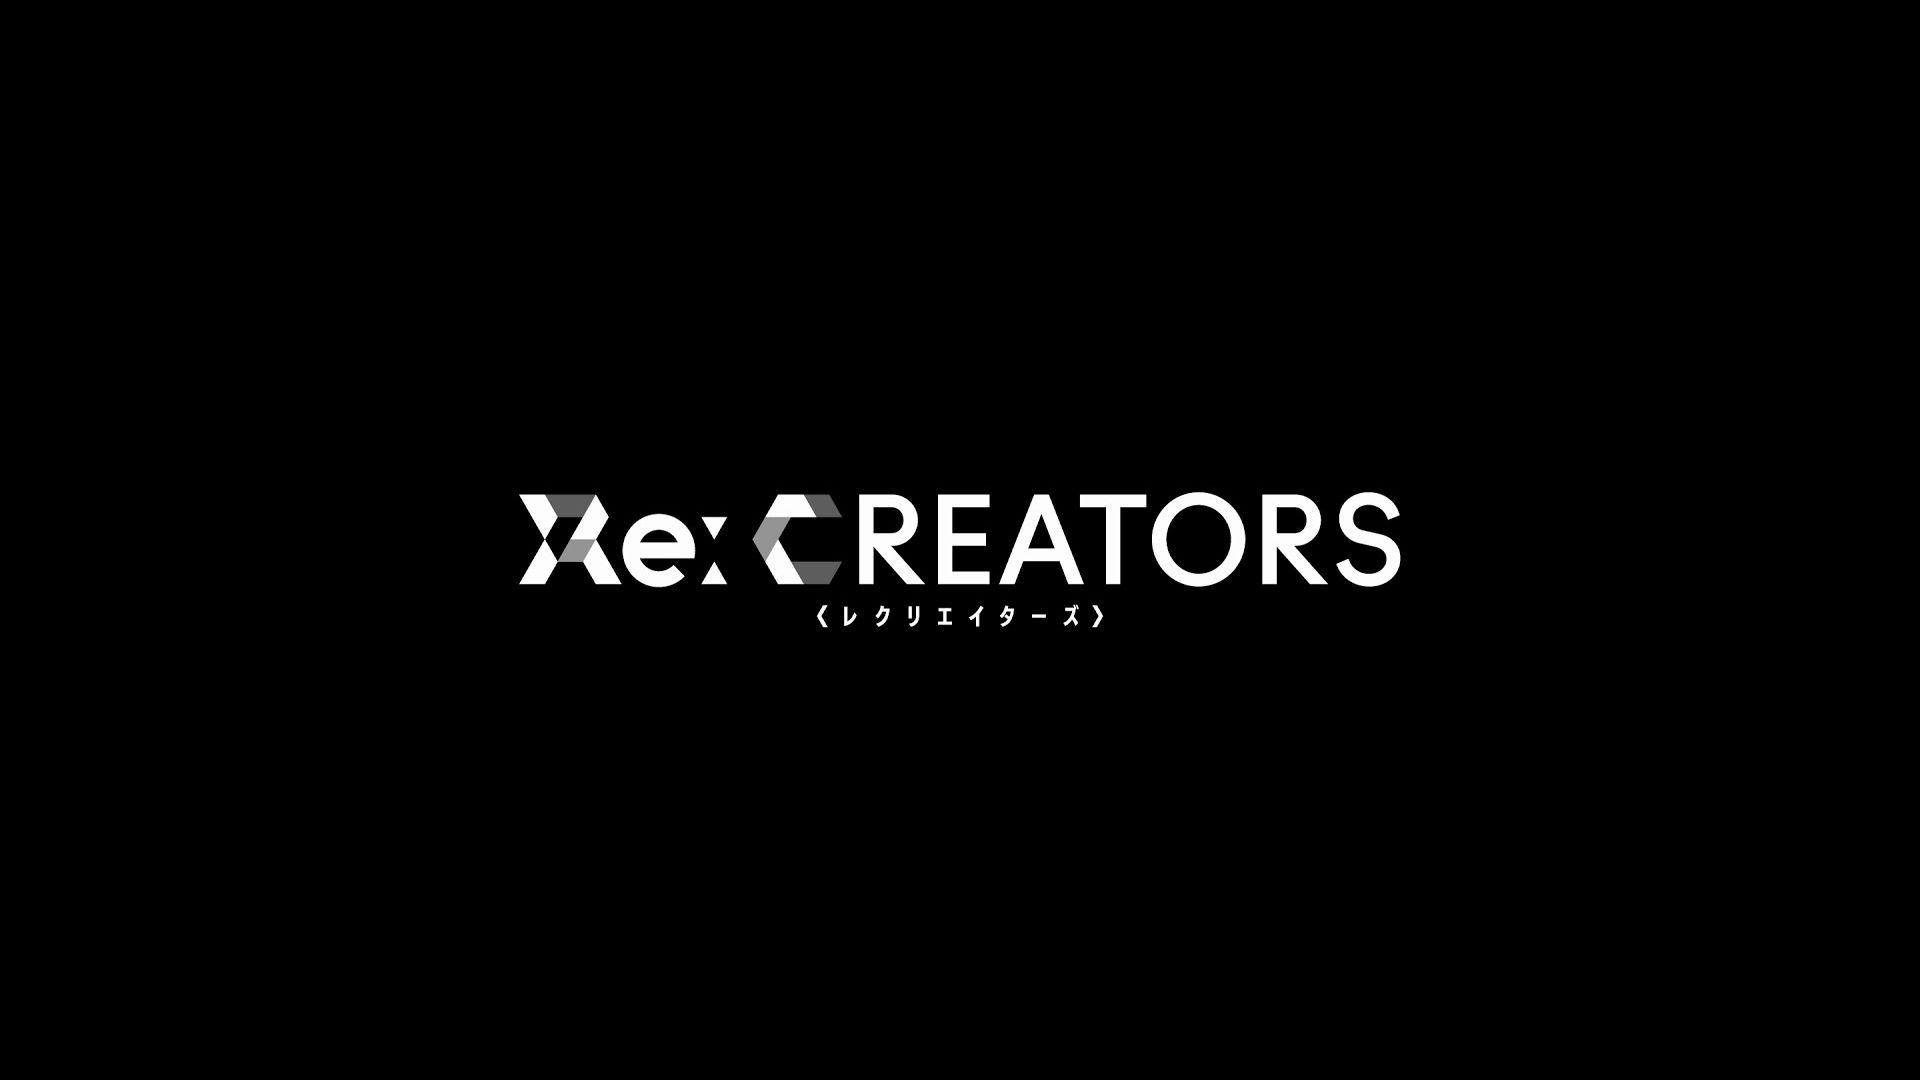 Re:CREATORS, #black background, #text, #katakana, #logo. Wallpaper